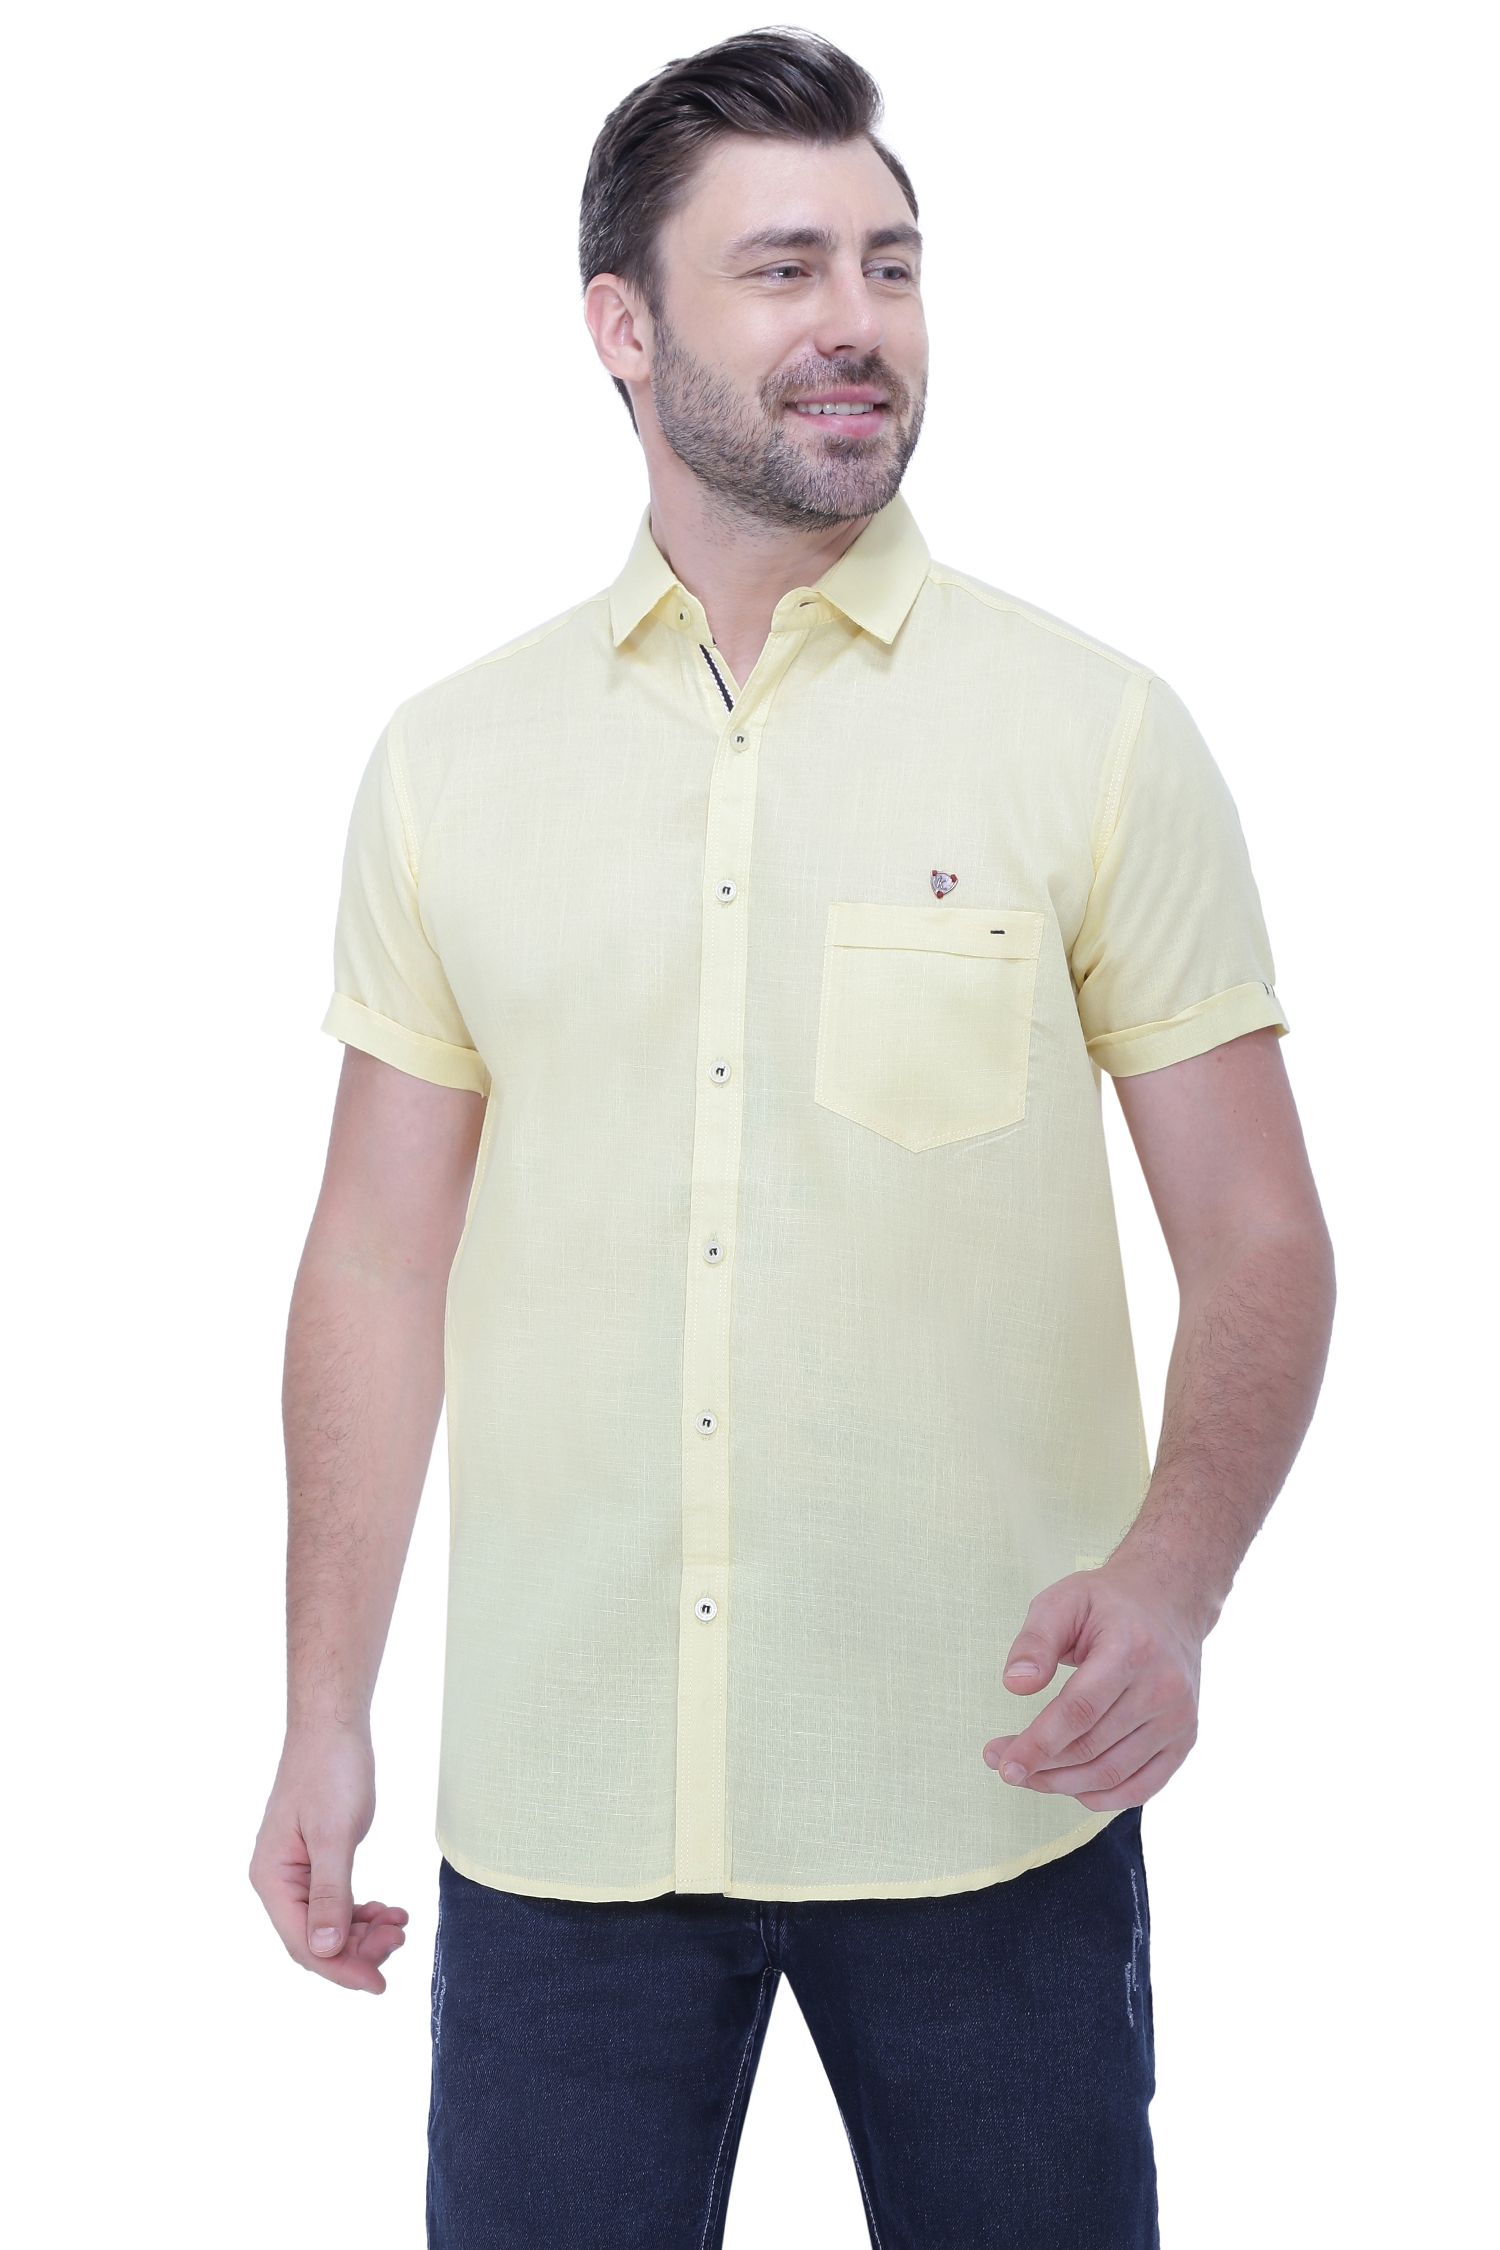 Kuons Avenue | Kuons Avenue Men's Linen Blend Half Sleeves Casual Shirt-KACLHS1241